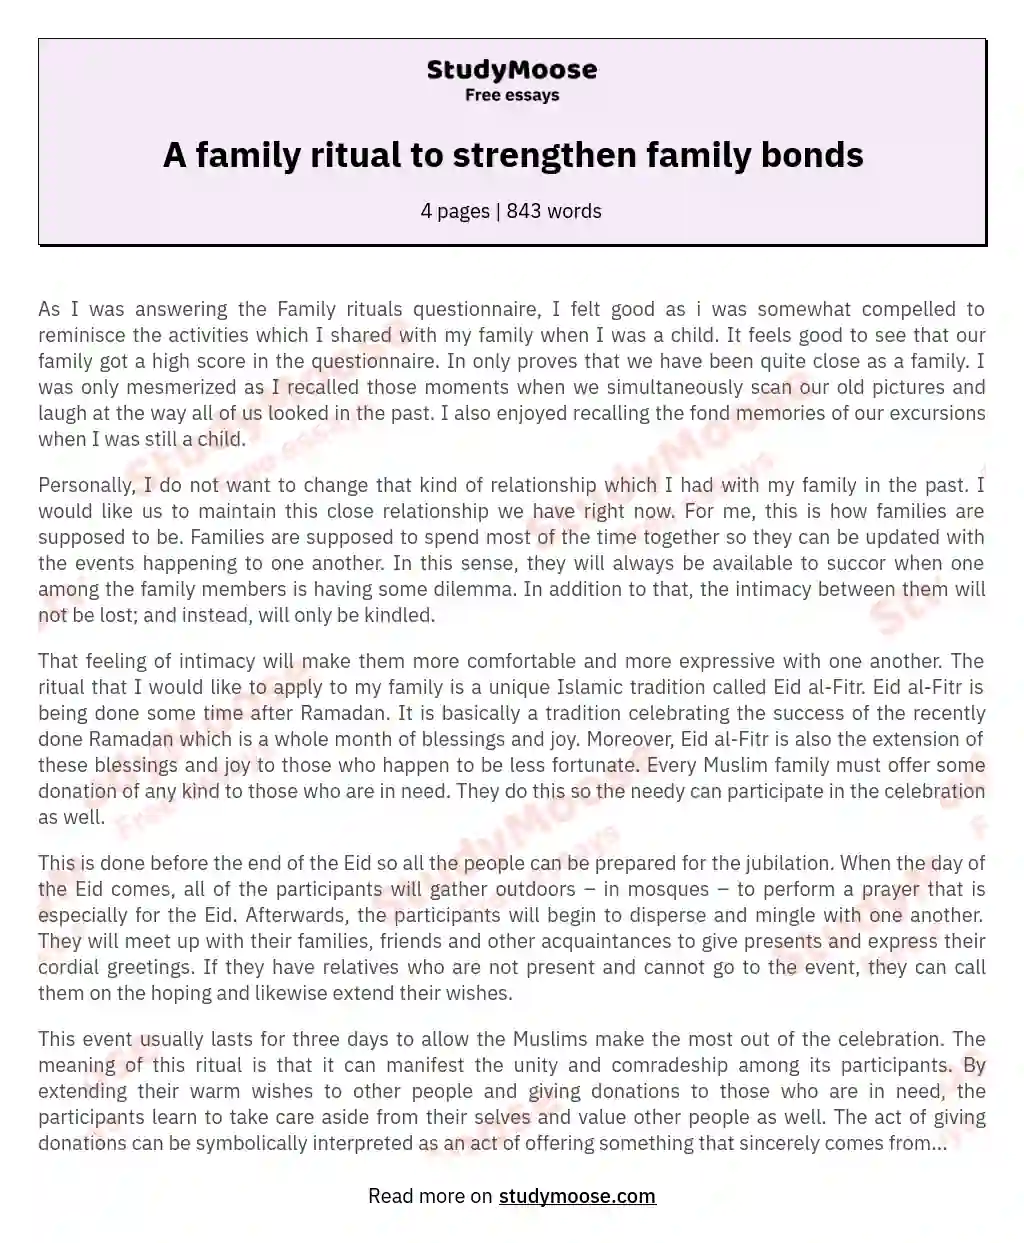 A family ritual to strengthen family bonds